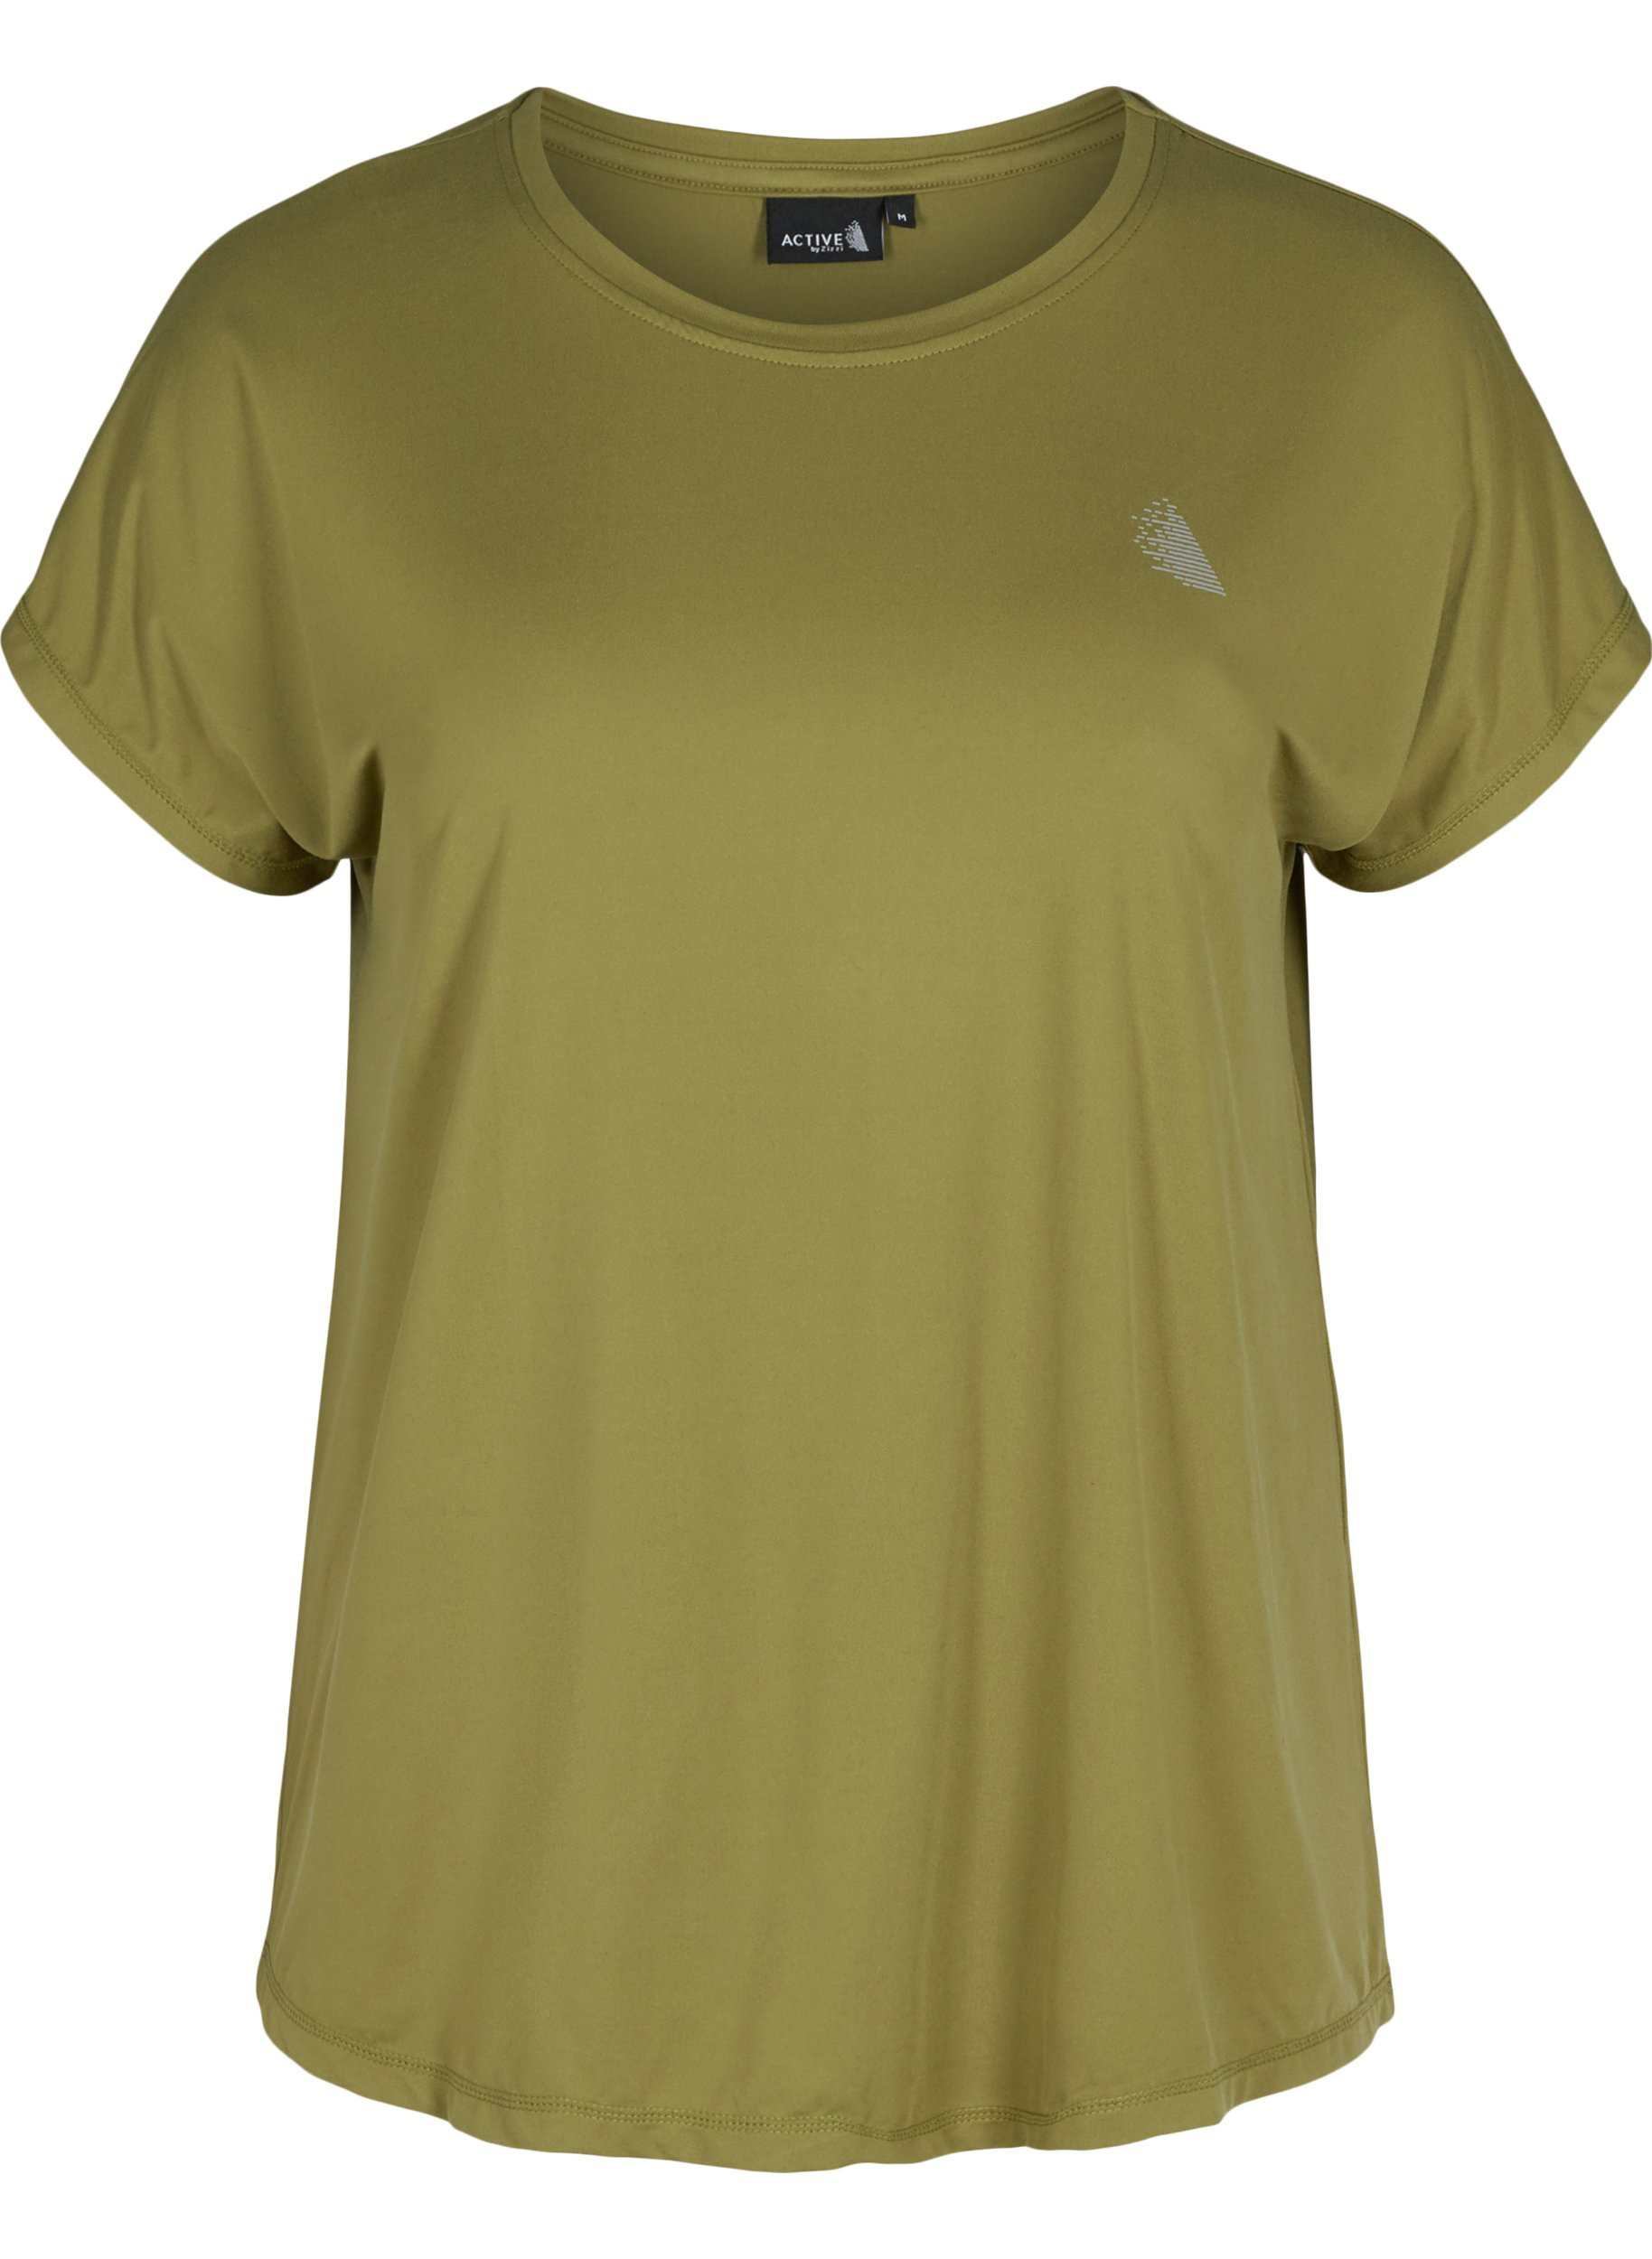 T-shirt, Olive Drab